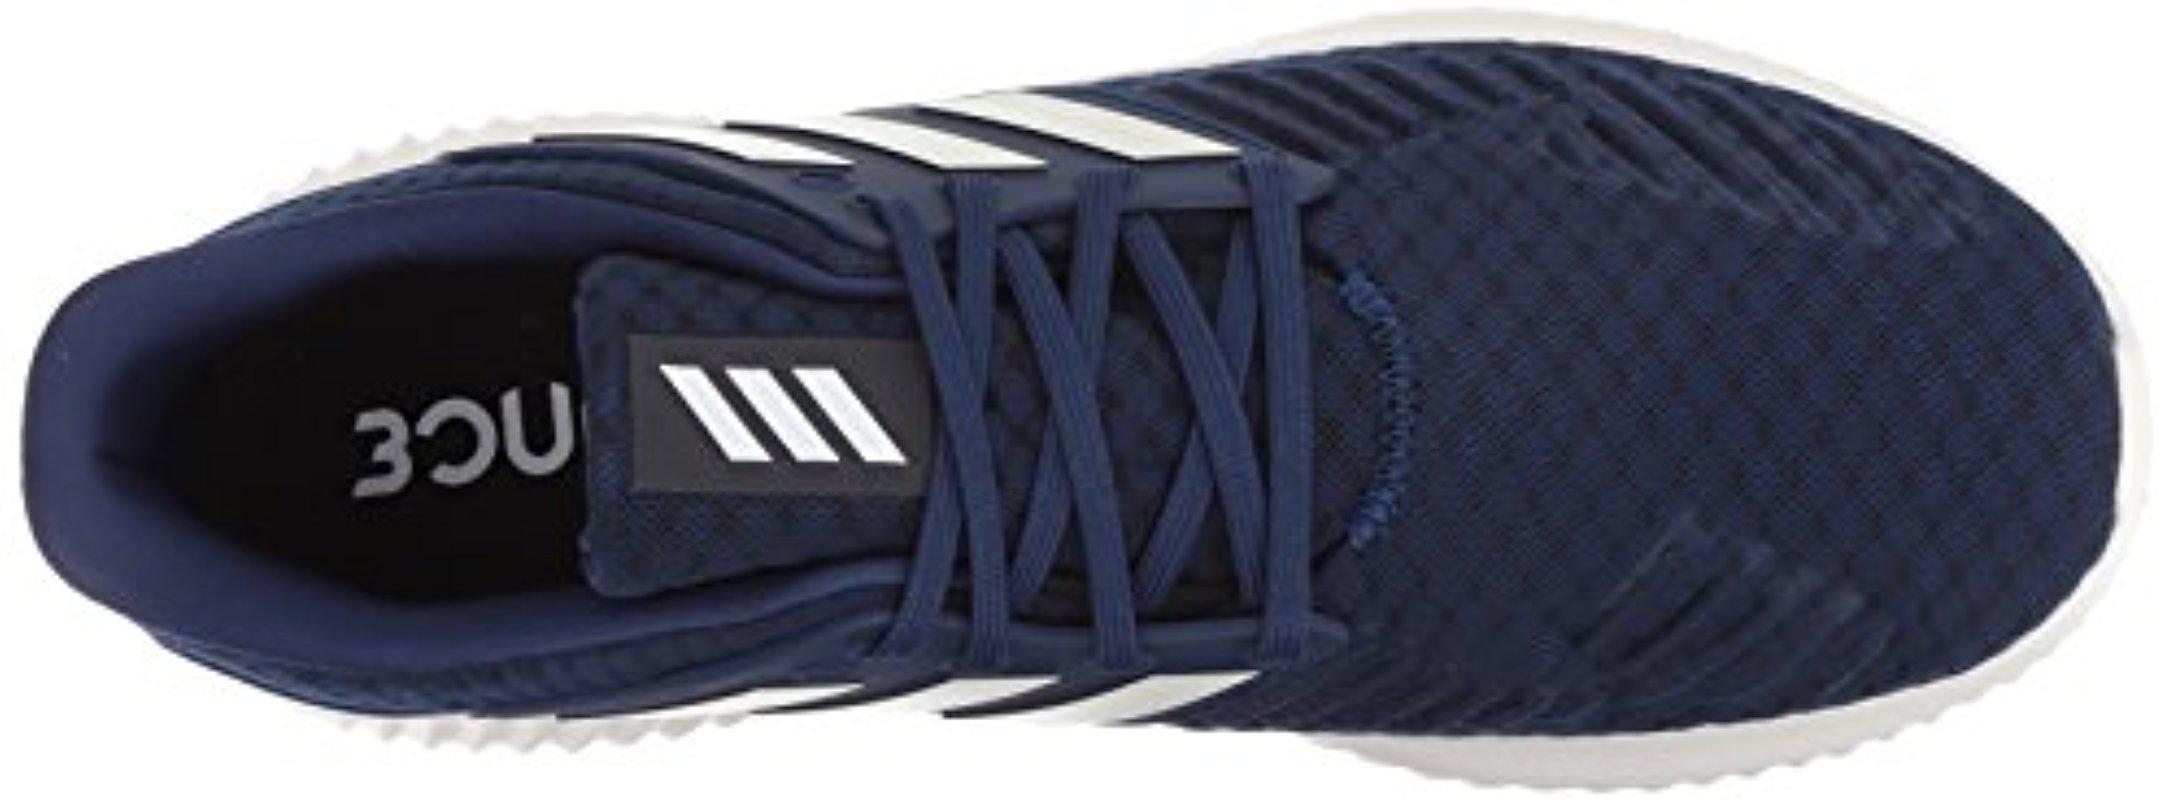 adidas Alphabounce Rc.2 Running Shoe in Dark Blue/Cloud White/Dark Blue  (Blue) for Men - Lyst